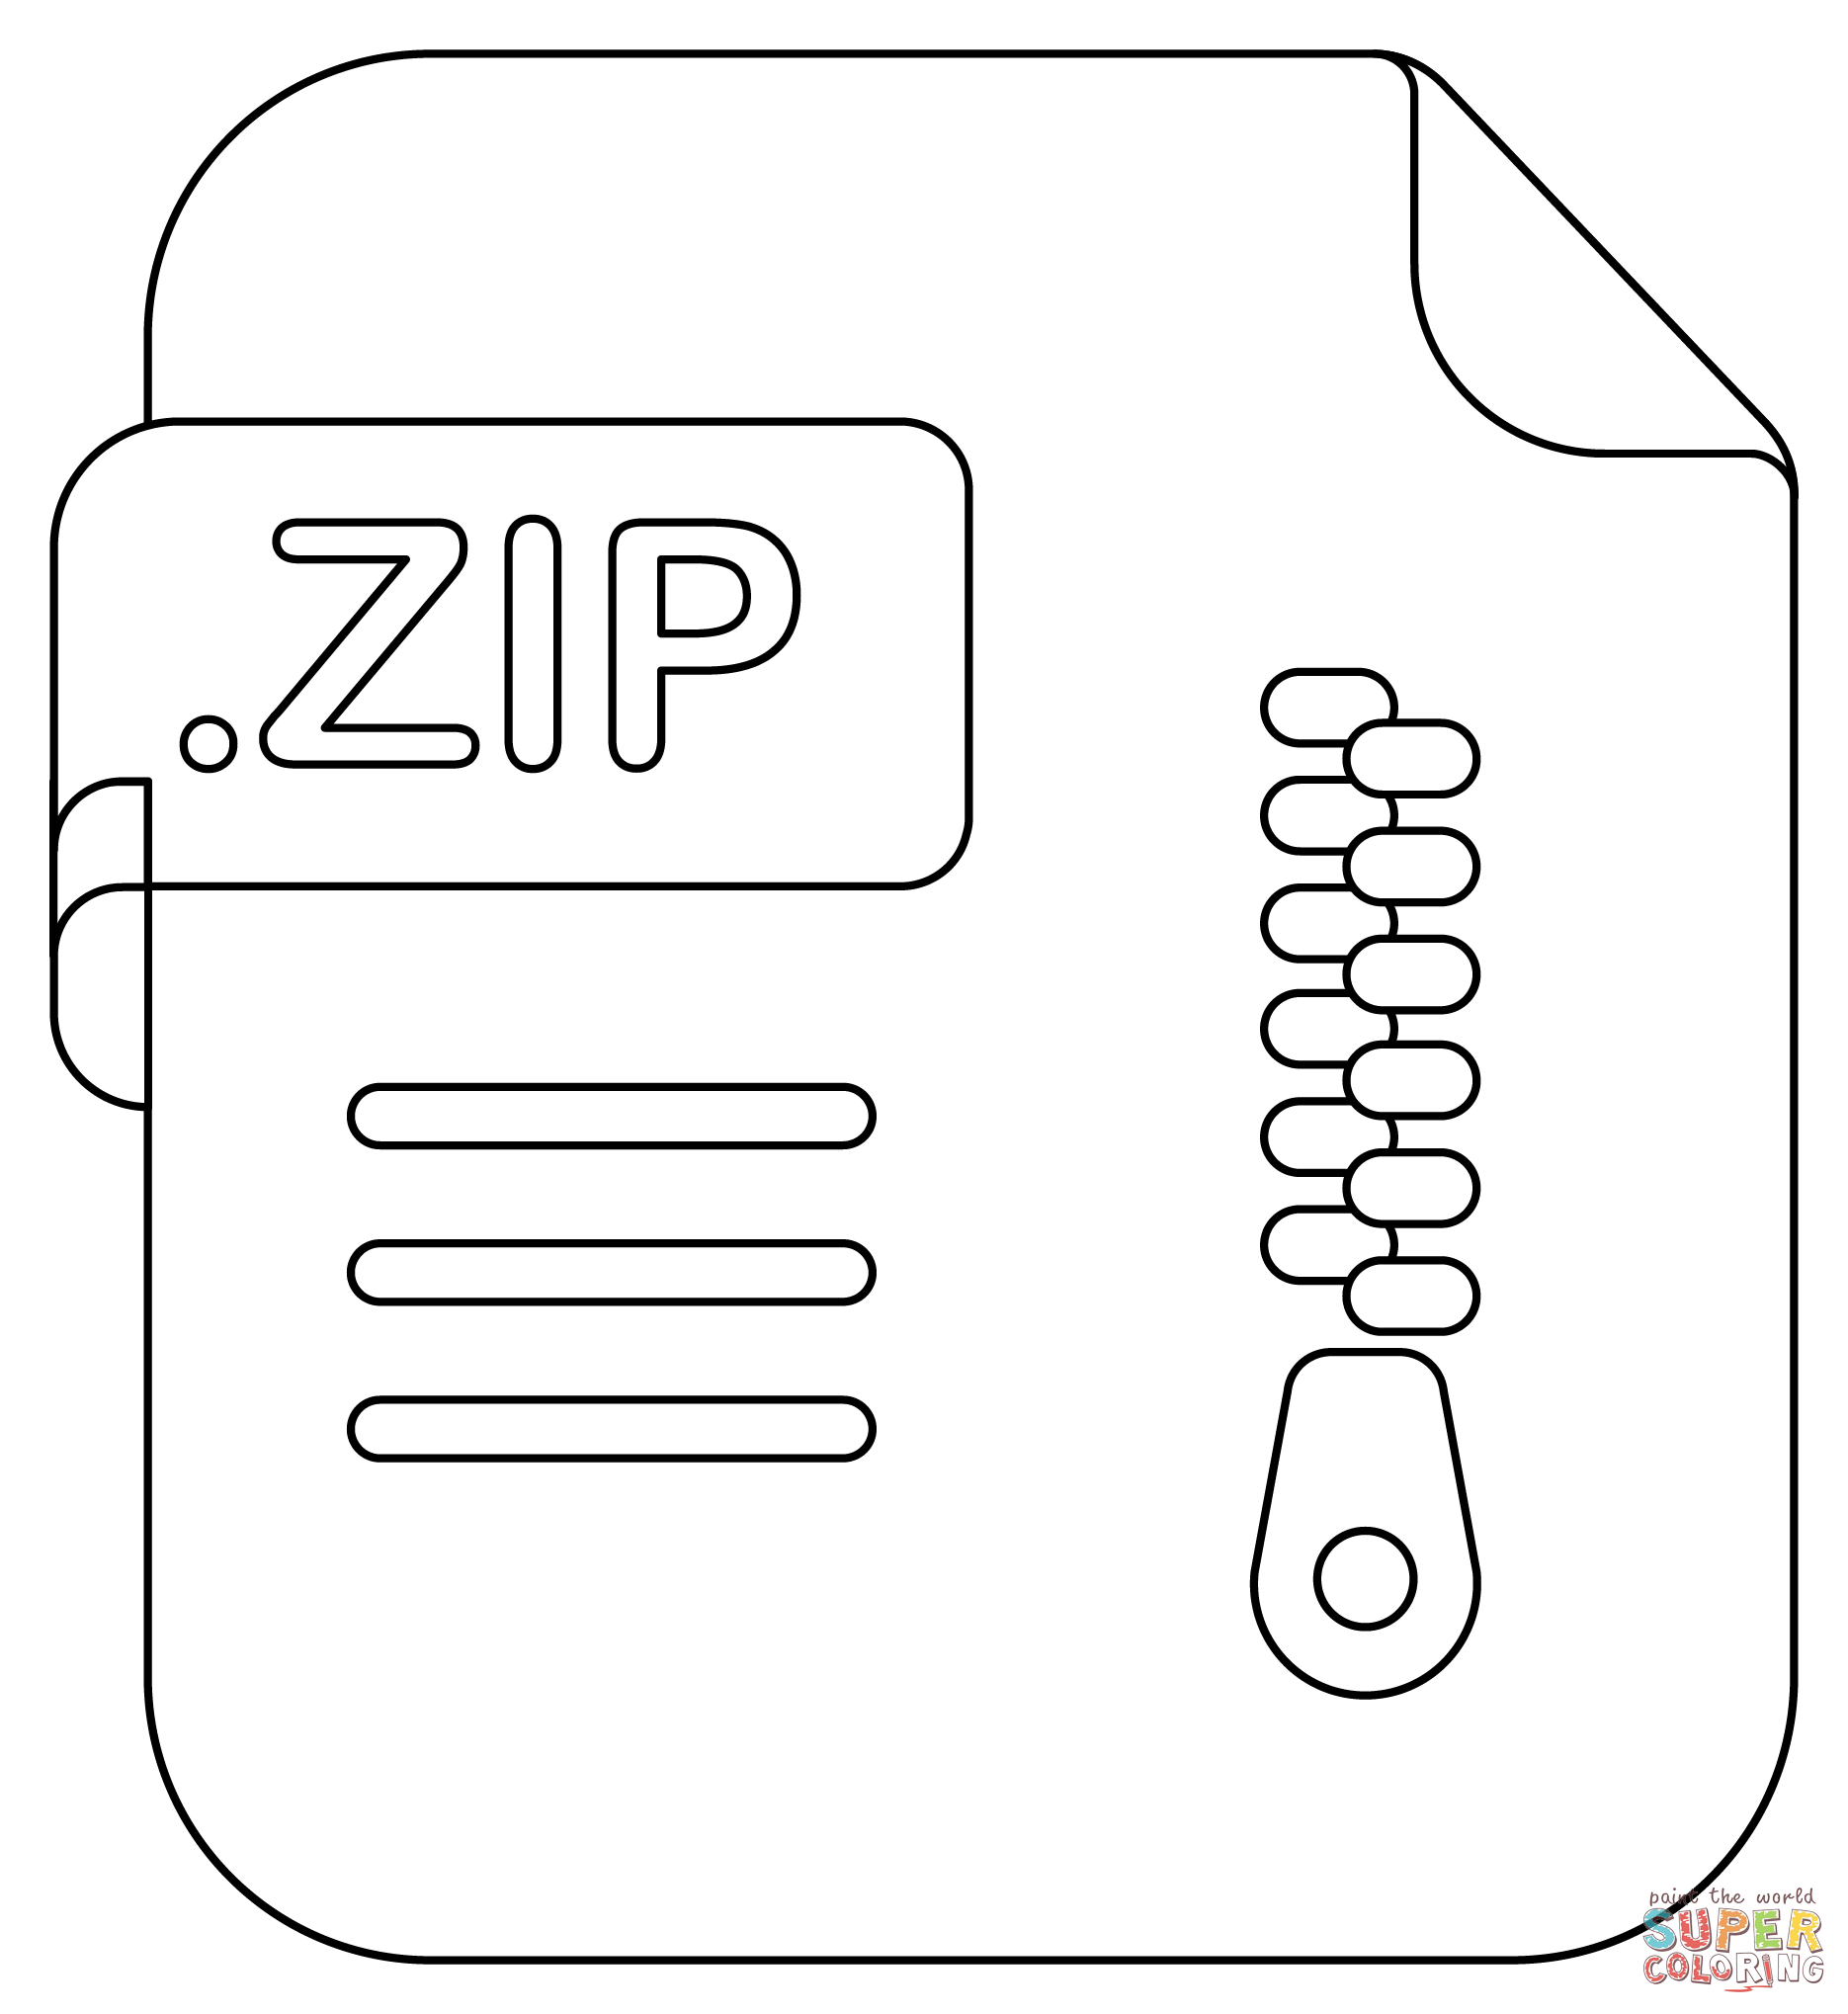 Zip coloring page | Free Printable ...